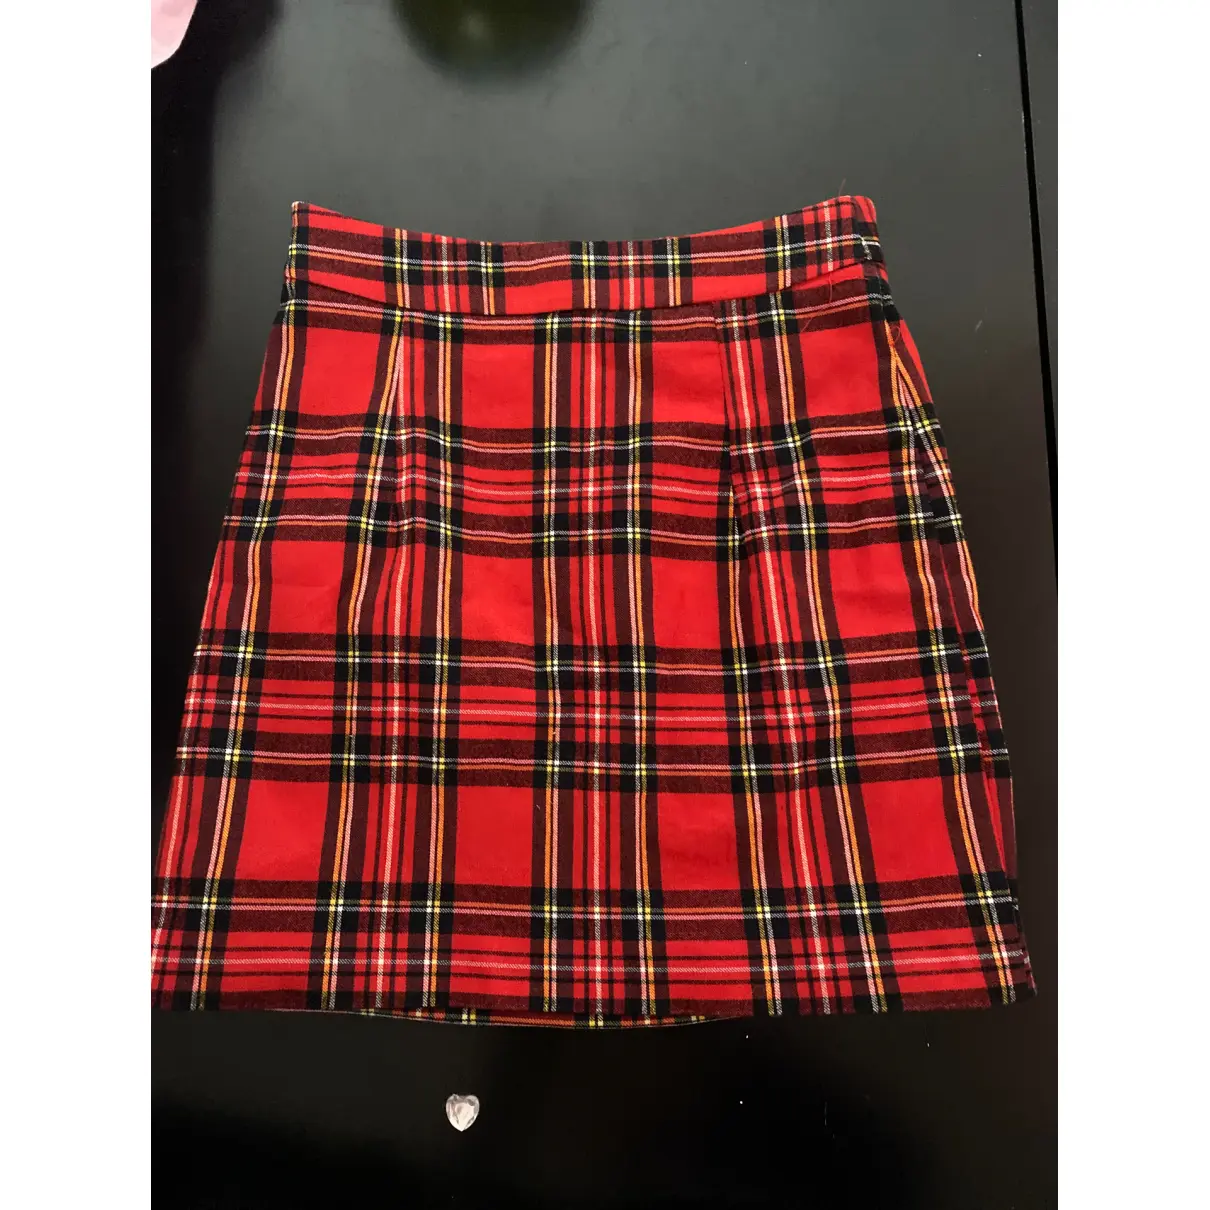 Buy Vicolo Mini skirt online